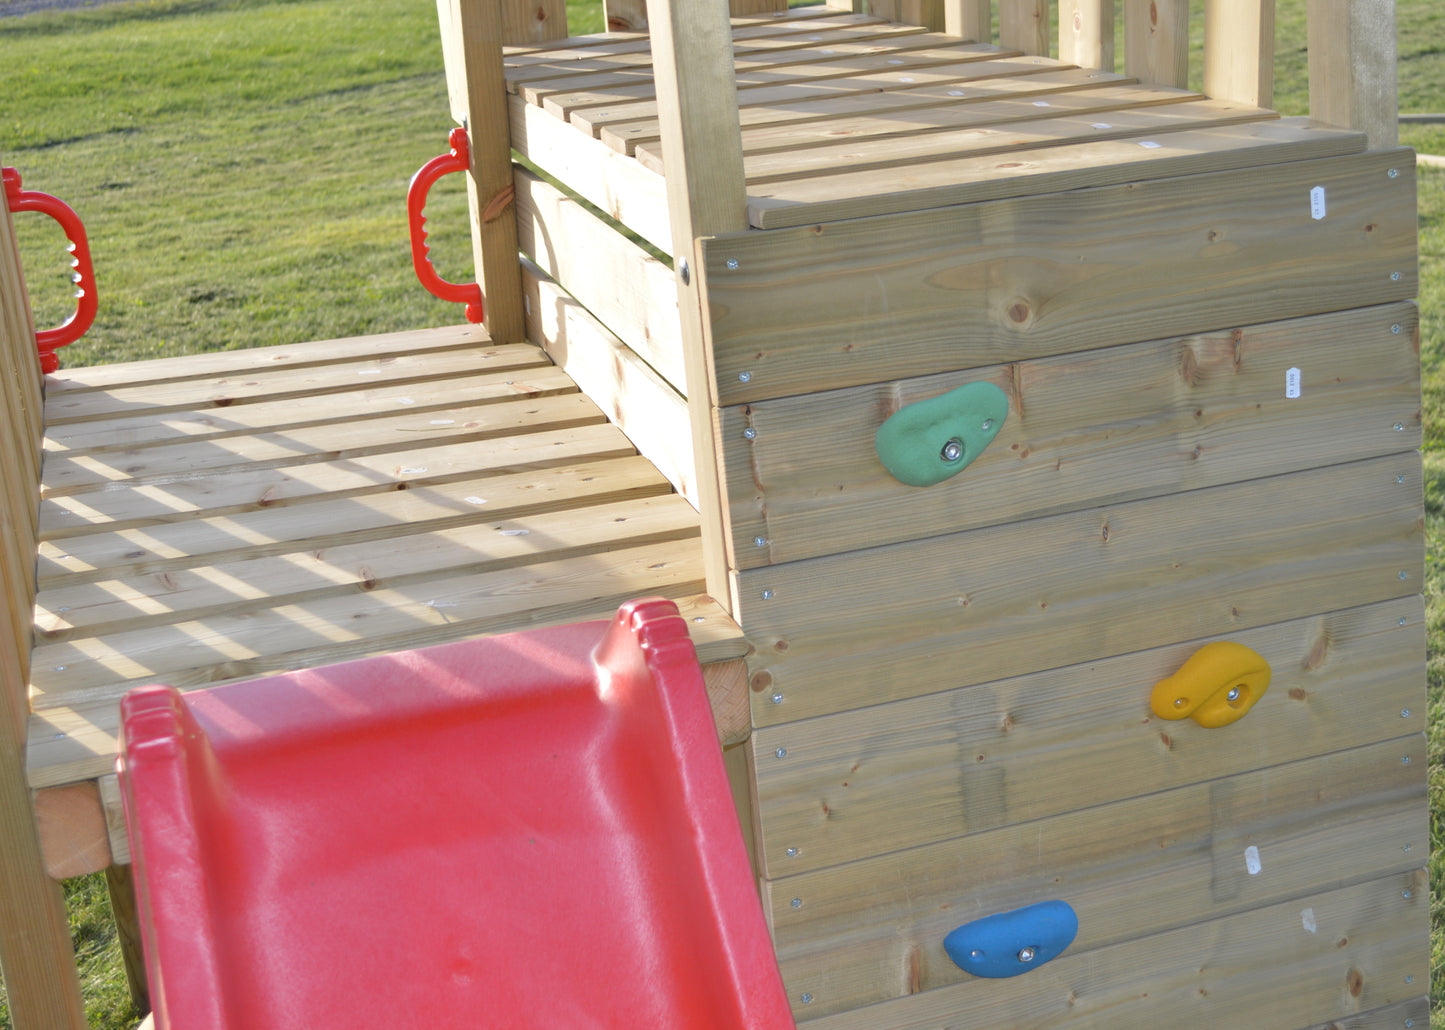 J4 Junior garden playground with slide and swing